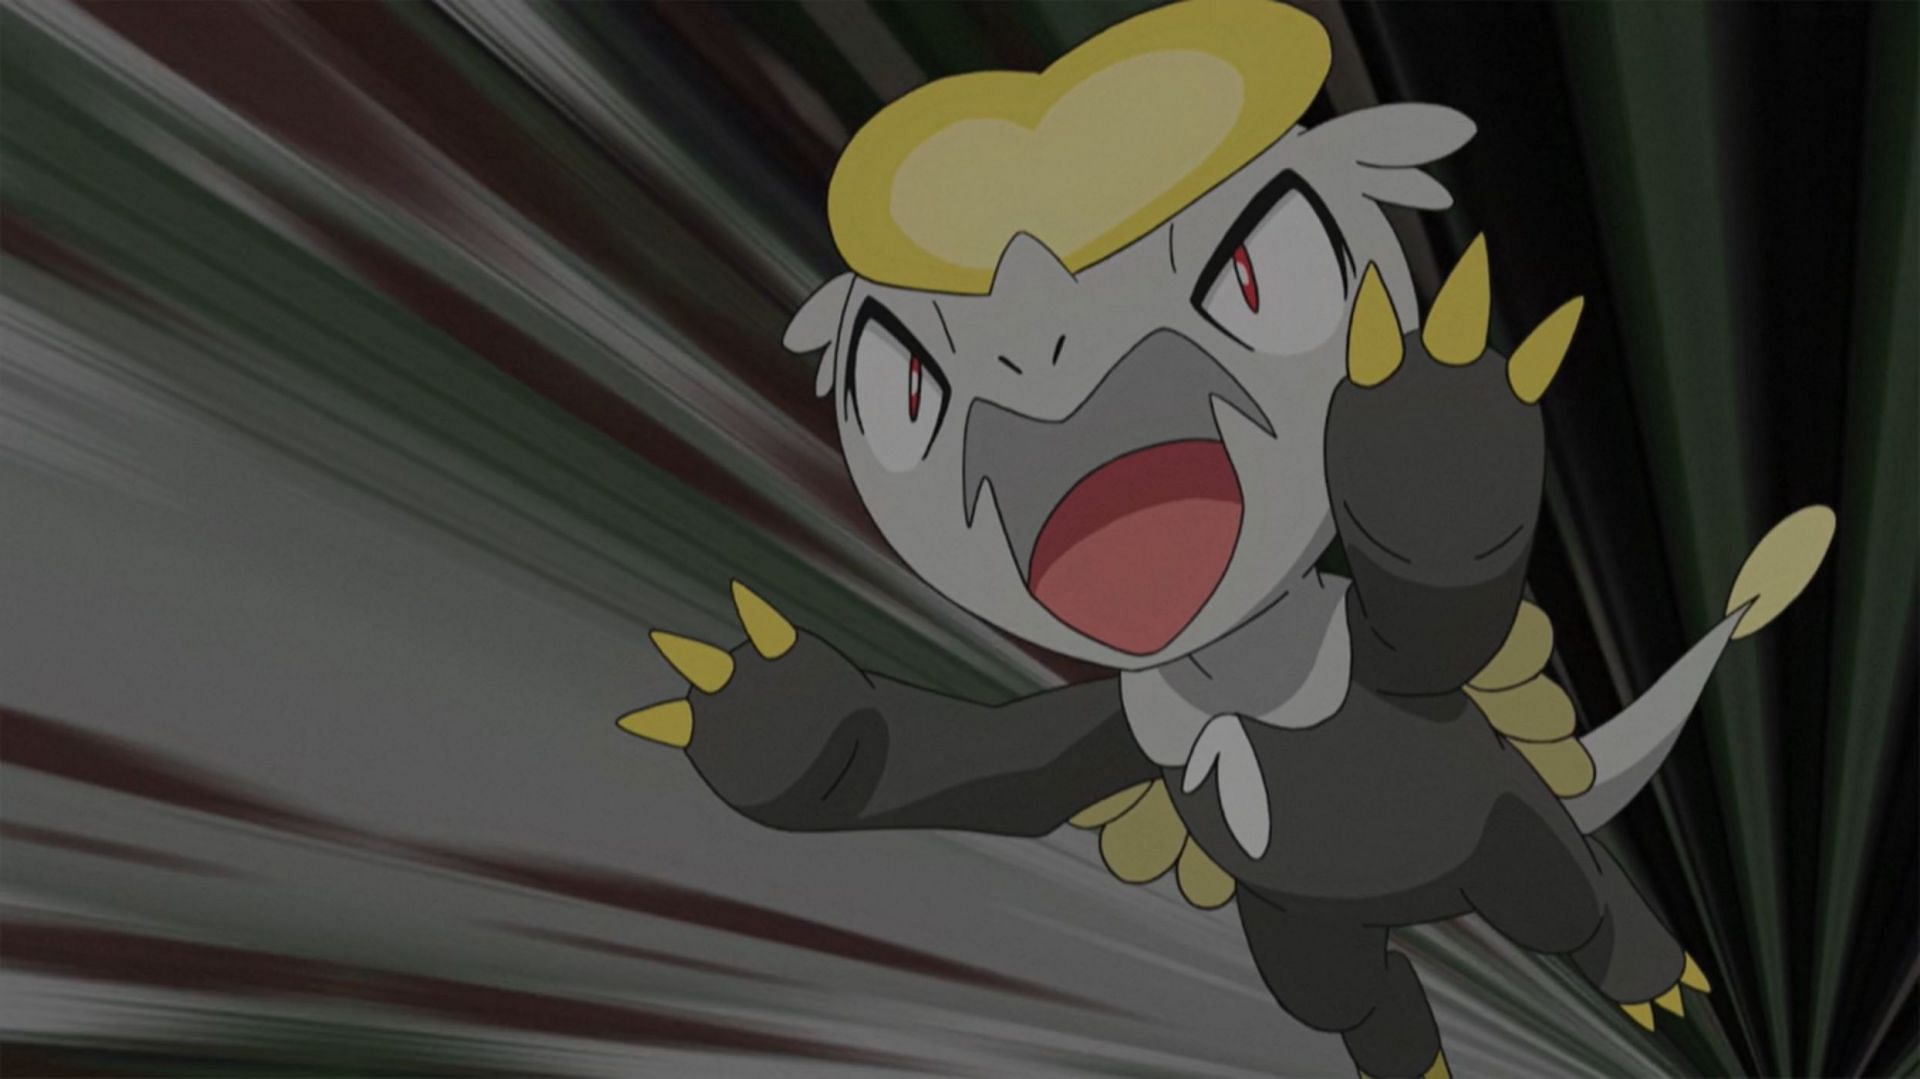 A Jangmo-o attacks in the Pokemon anime (Image via The Pokemon Company)